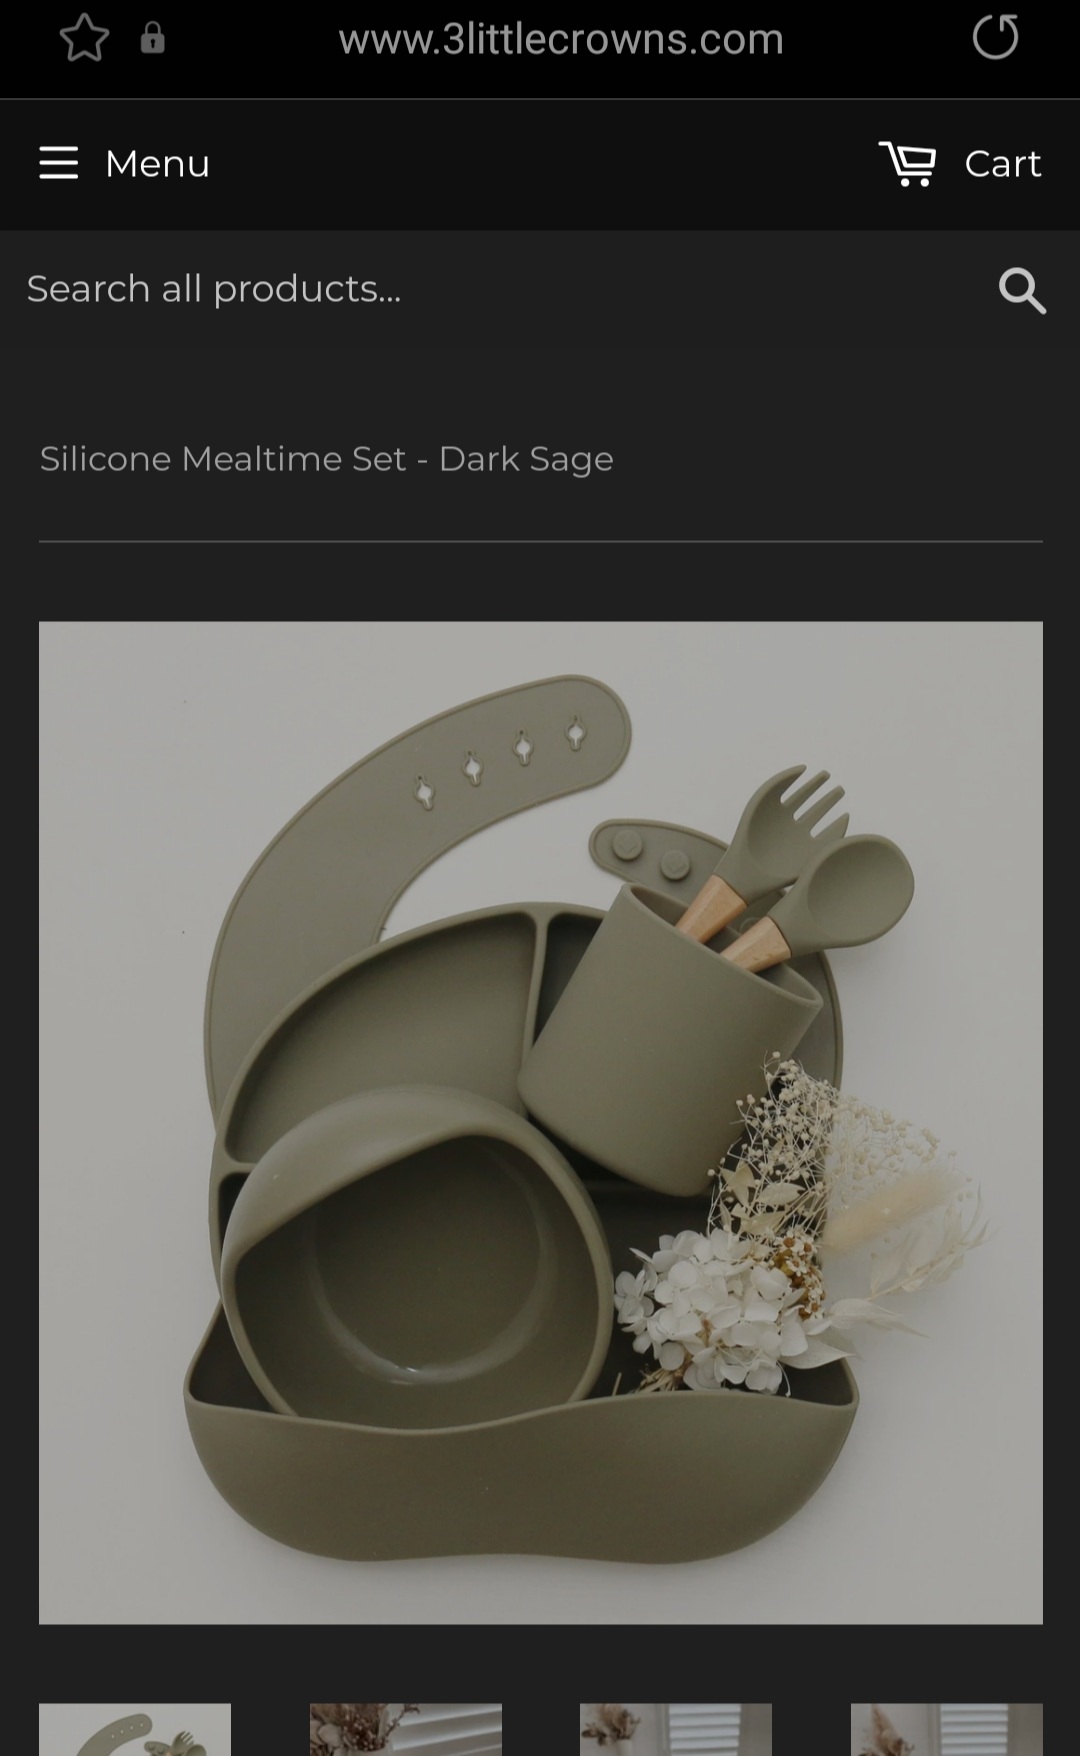 Silicone Mealtime Set - Dark Sage